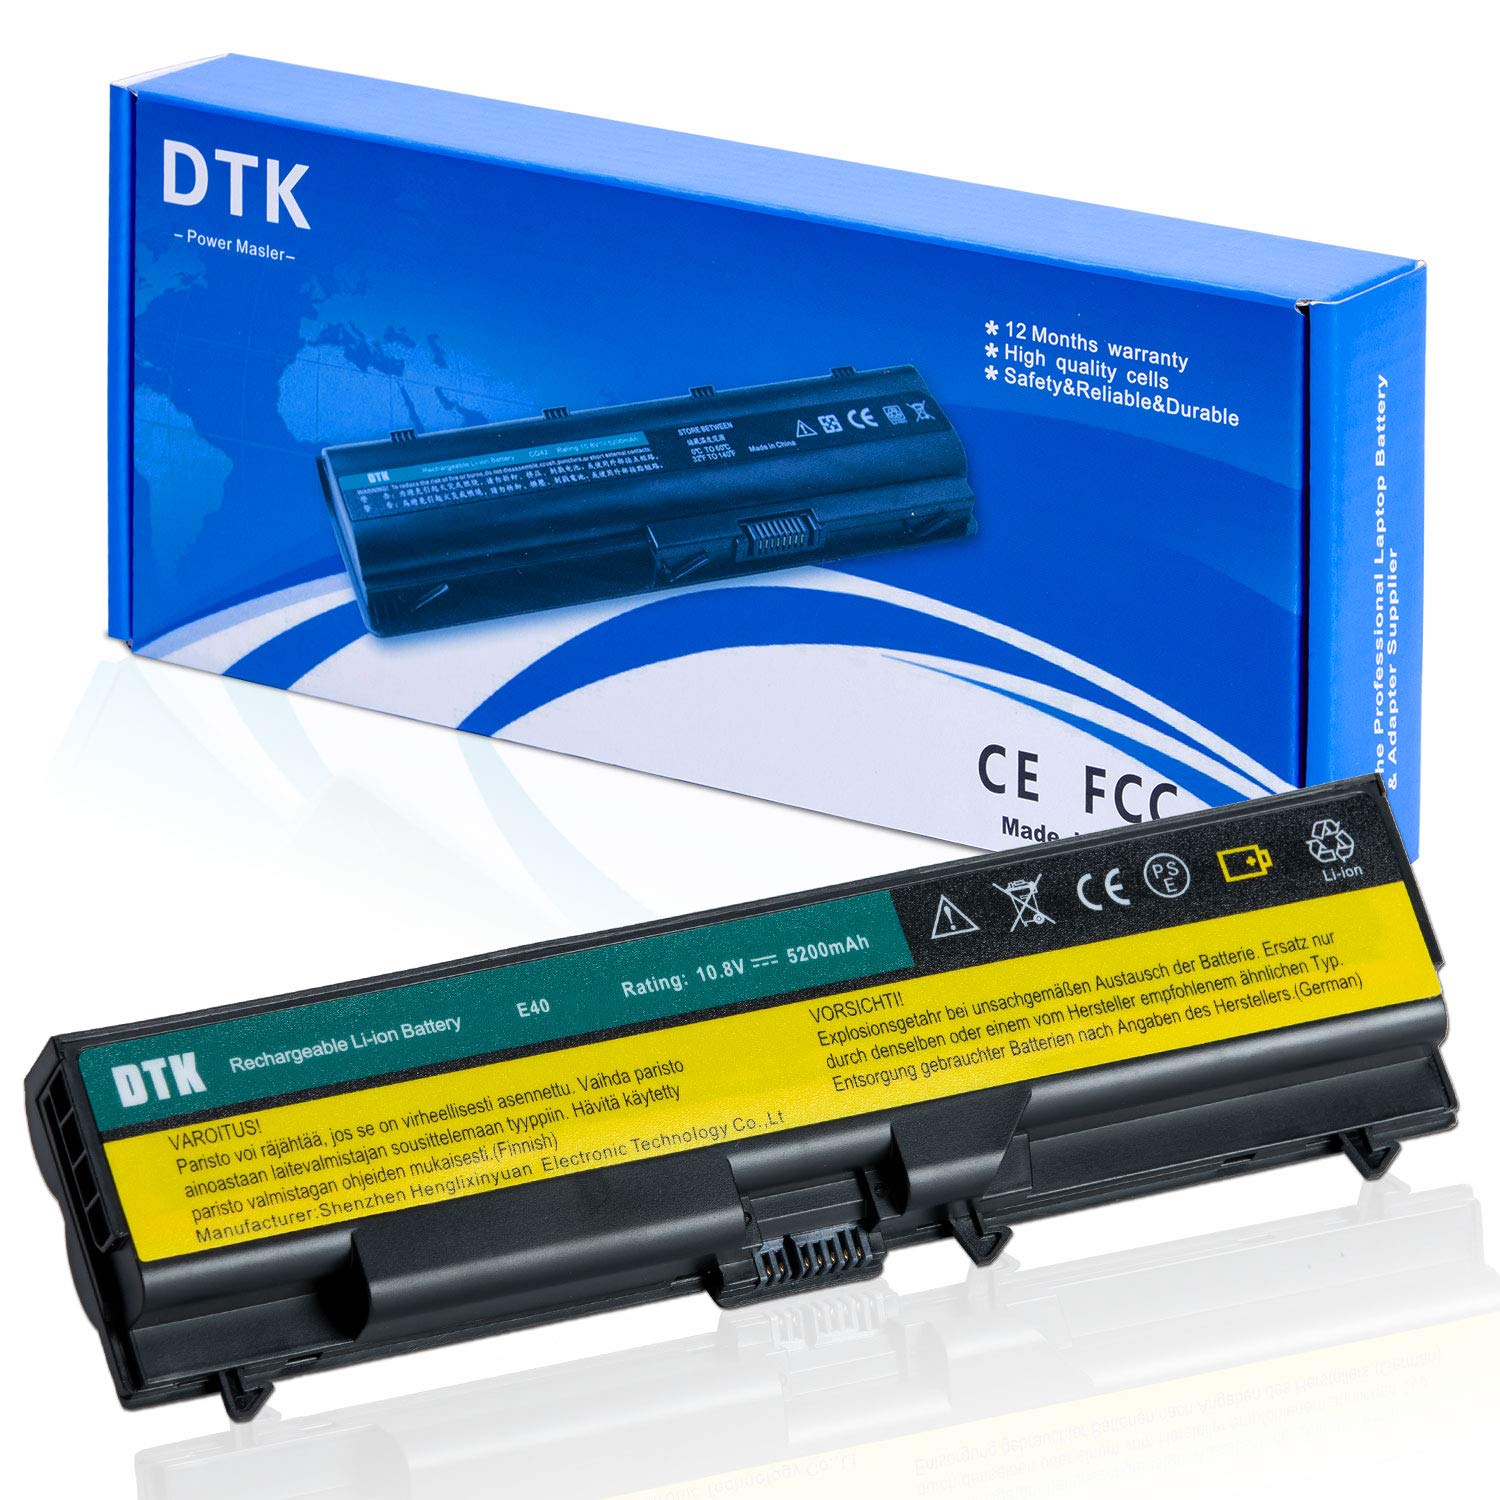 DTK Notebook Laptop Akku für Lenovo IBM Thinkpad Sl410 Sl410k Sl510 T410 T410i T420 T510 T510i T520 E40 E50 E420 E520 Series Laptop Battery Thinkpad W510 W520 Notebook Battery【10.8V 5200MAh】